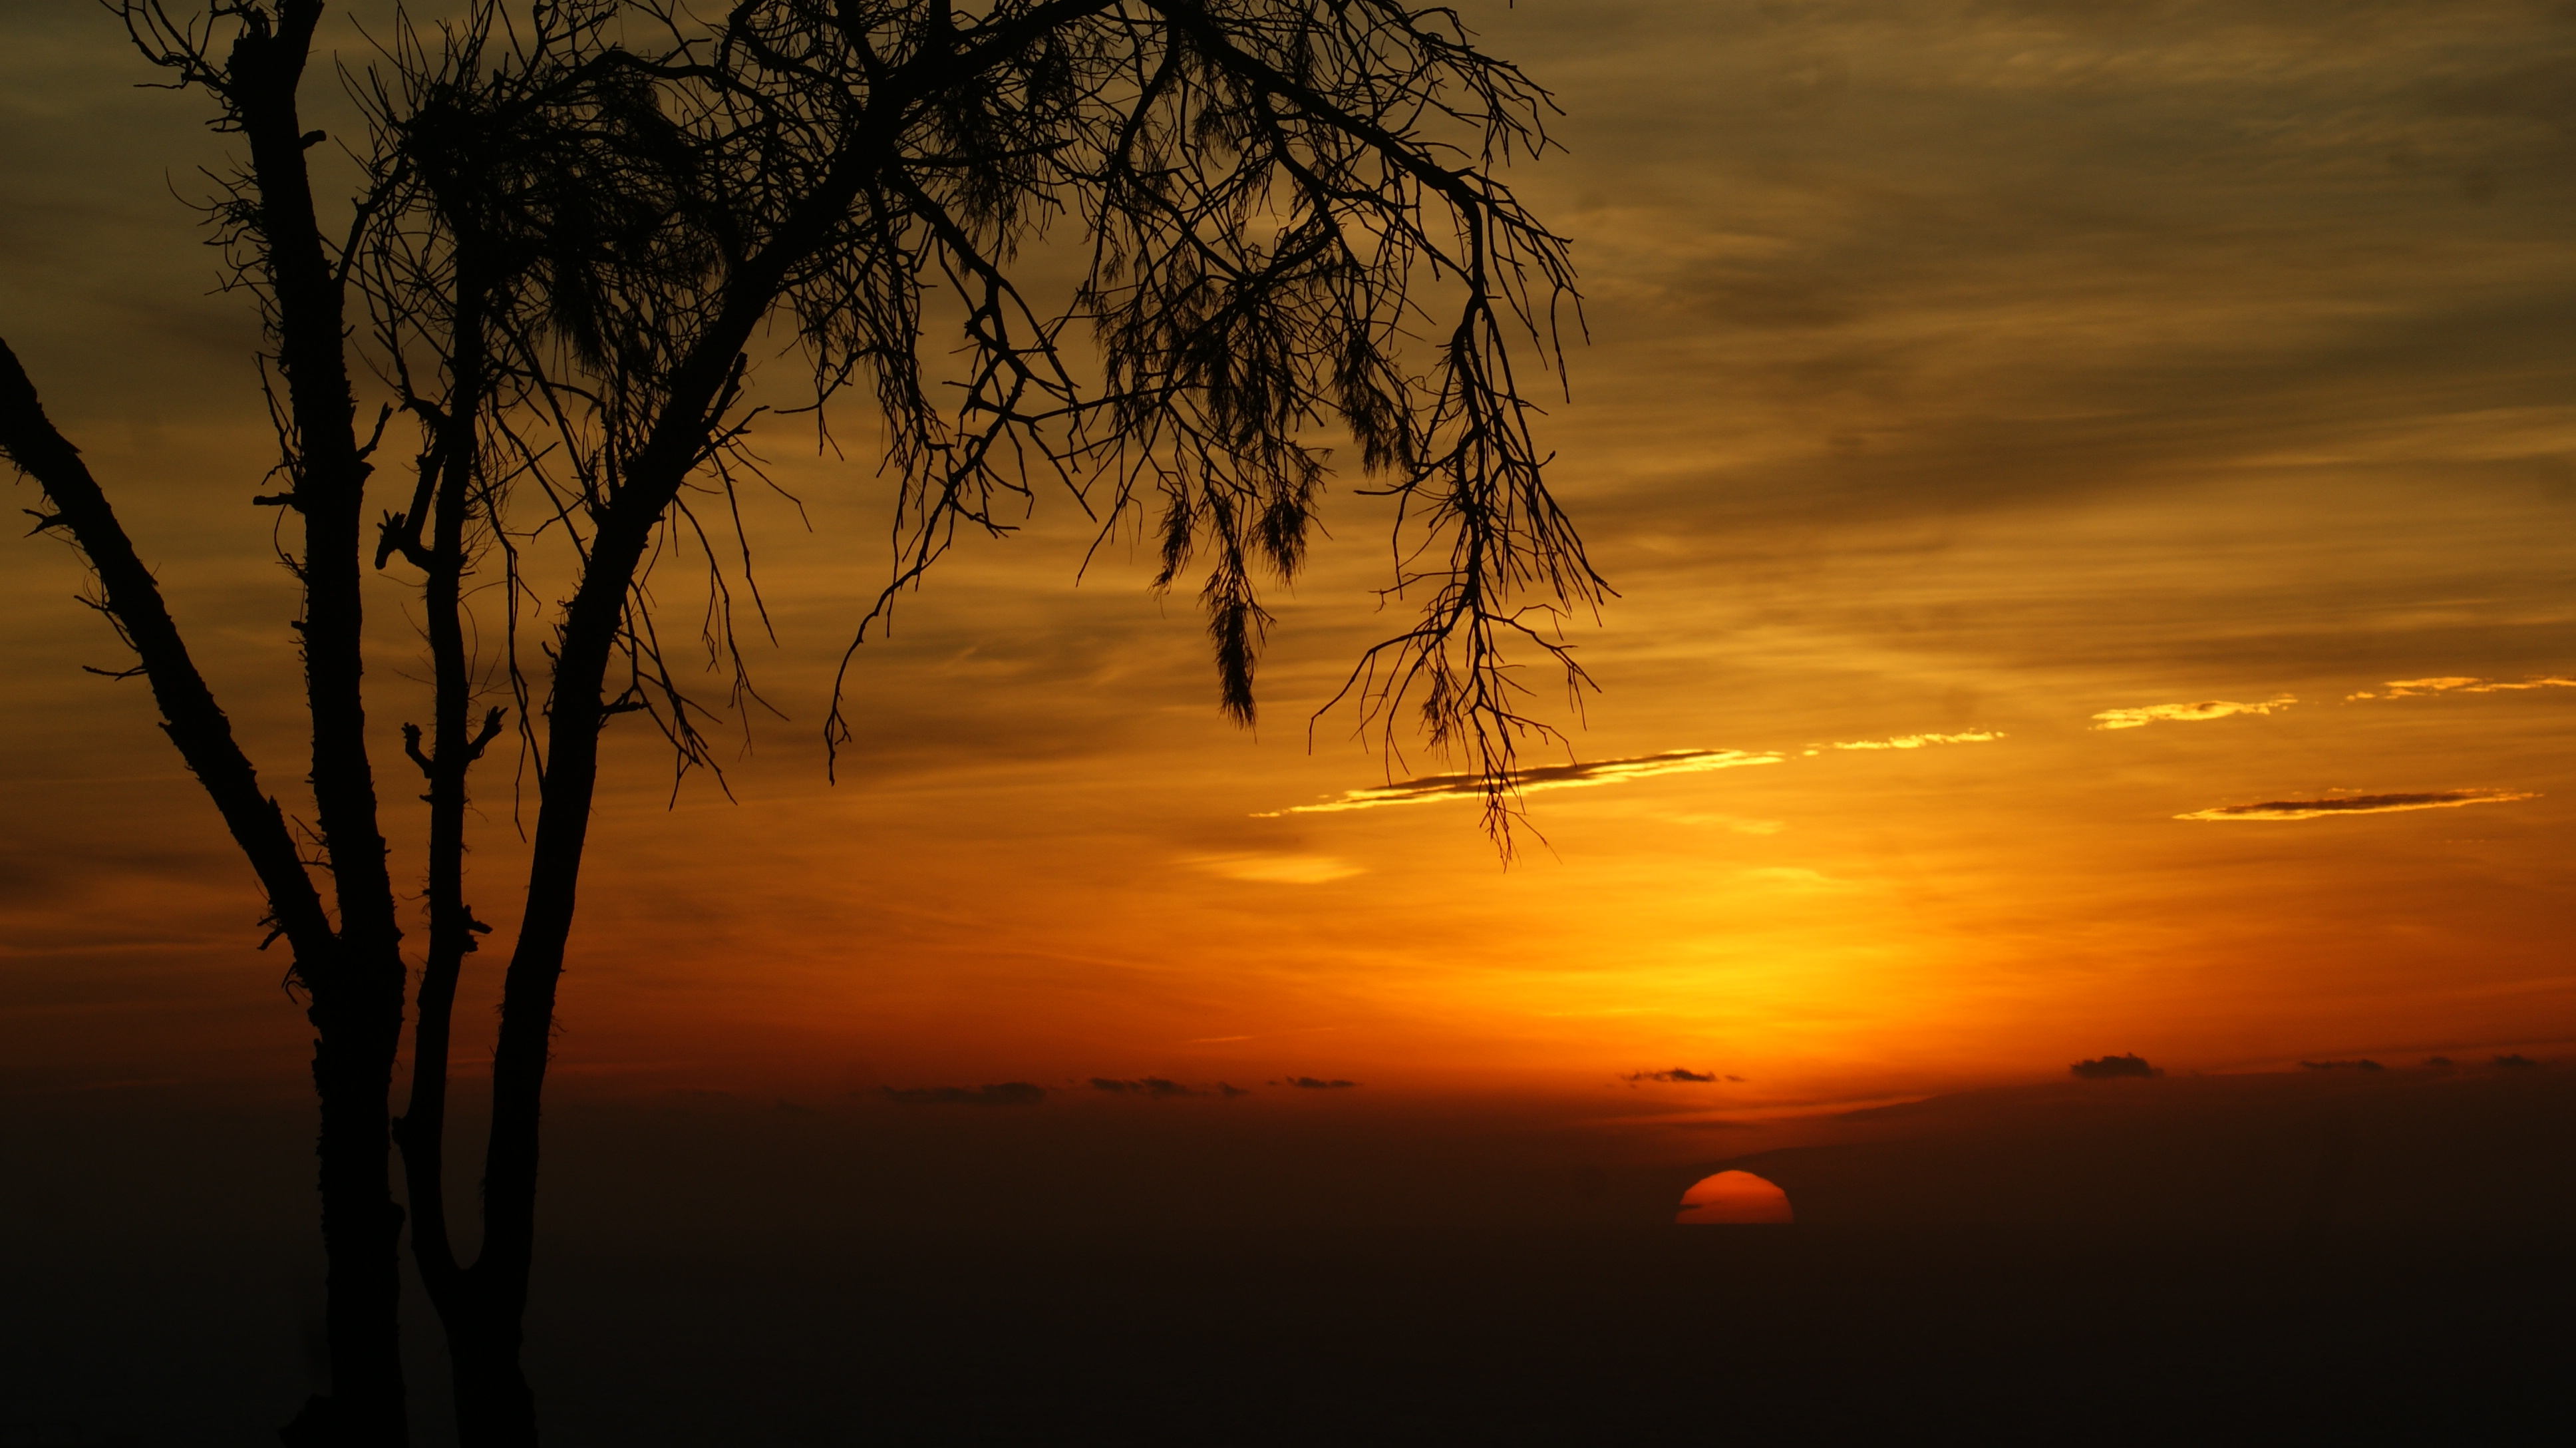 Mostaganem's sunset